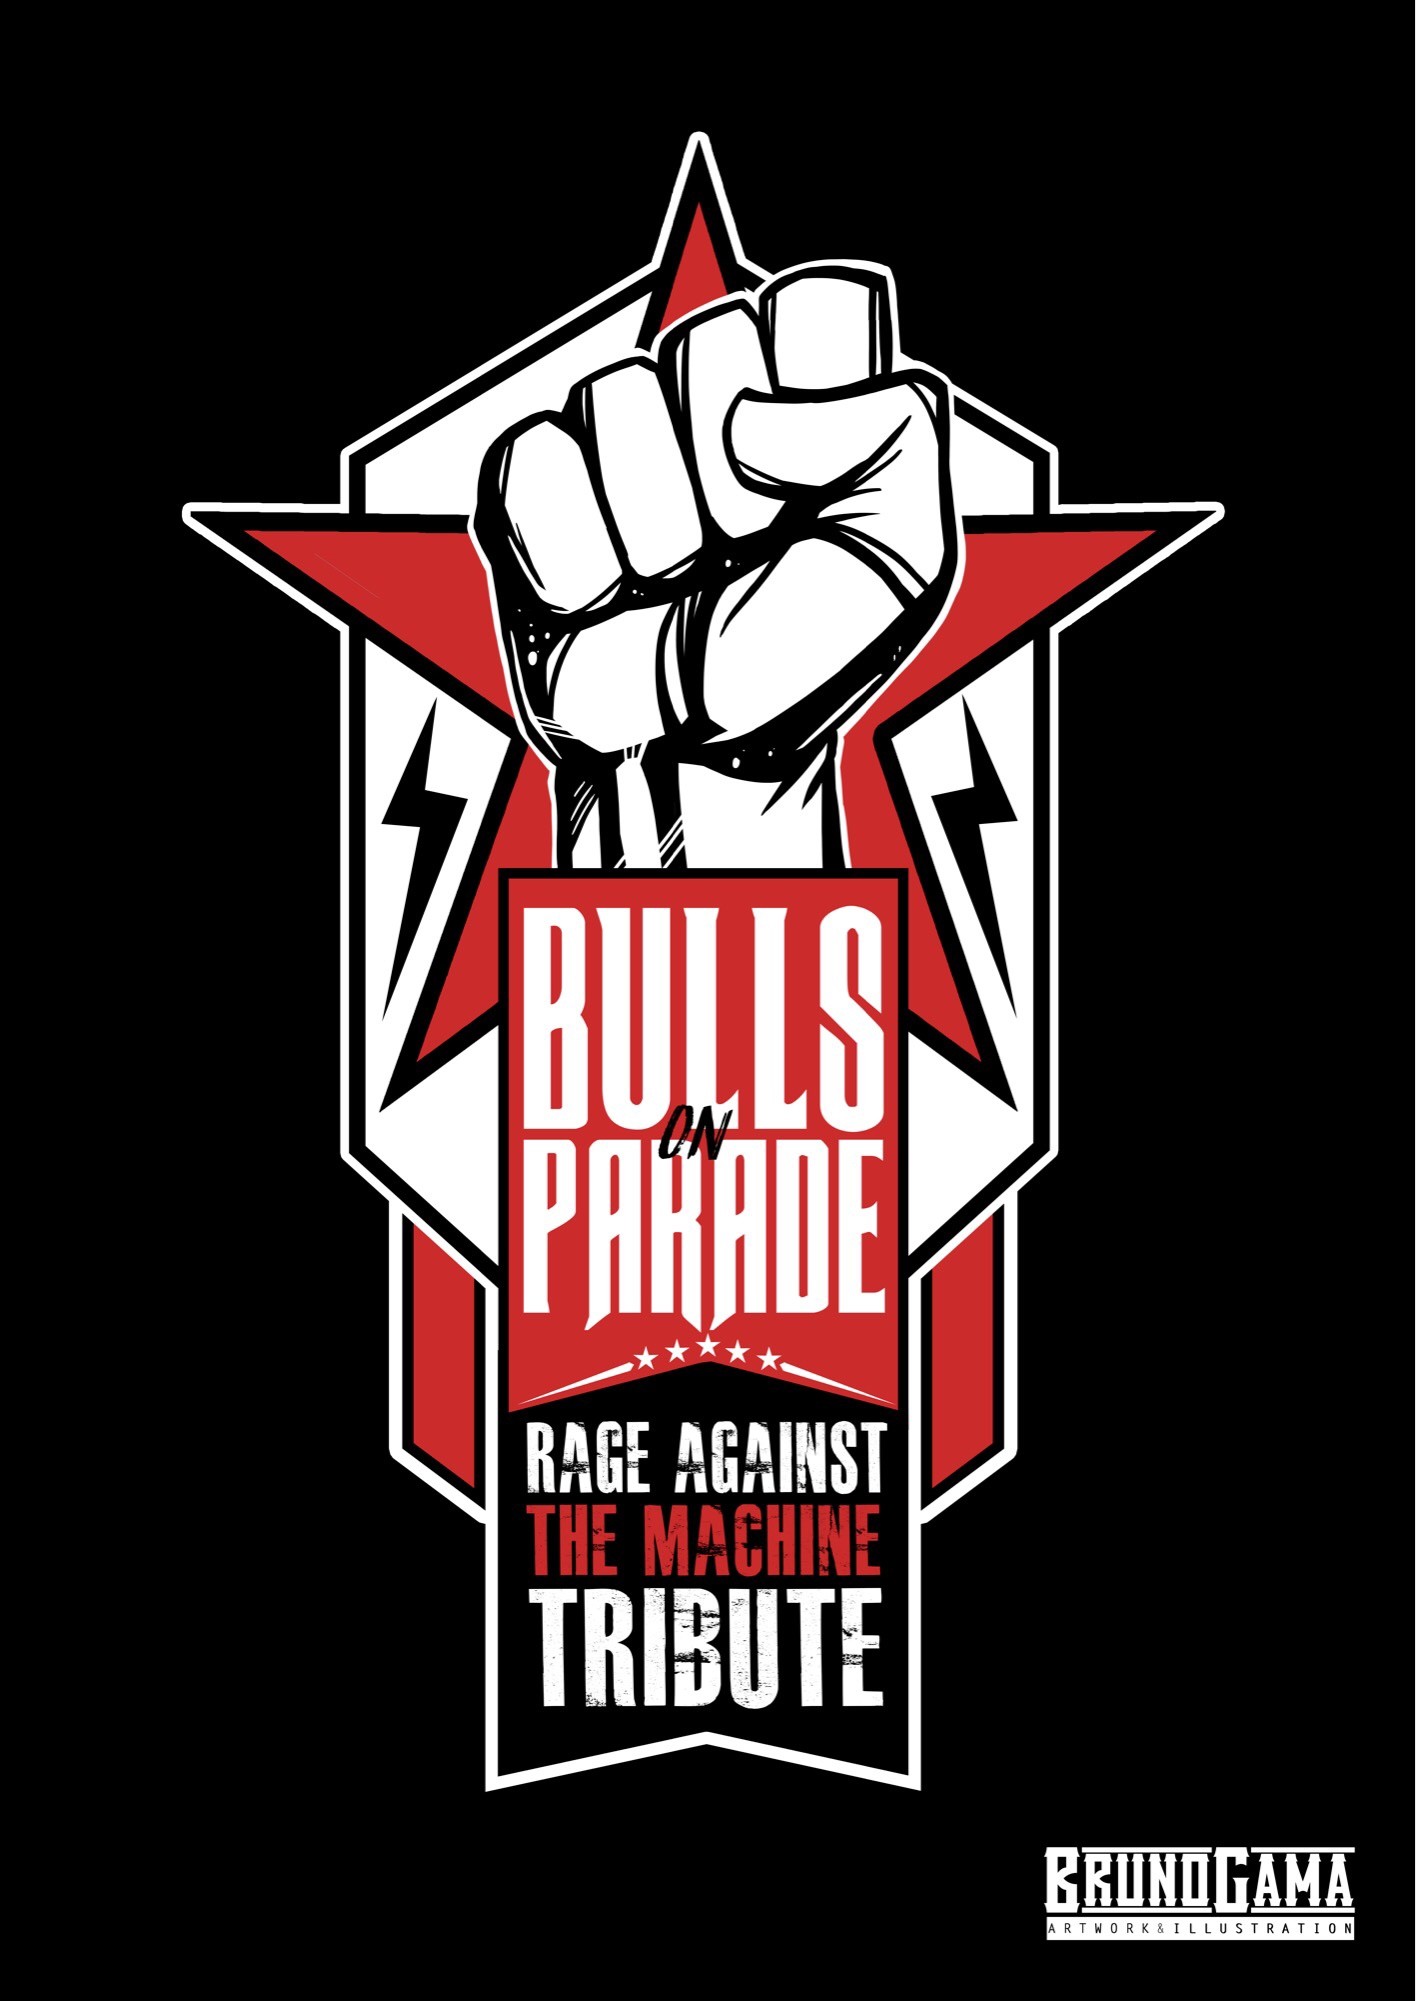 Bruno Gama Bulls On Parade Rage Against The Machine Tribute